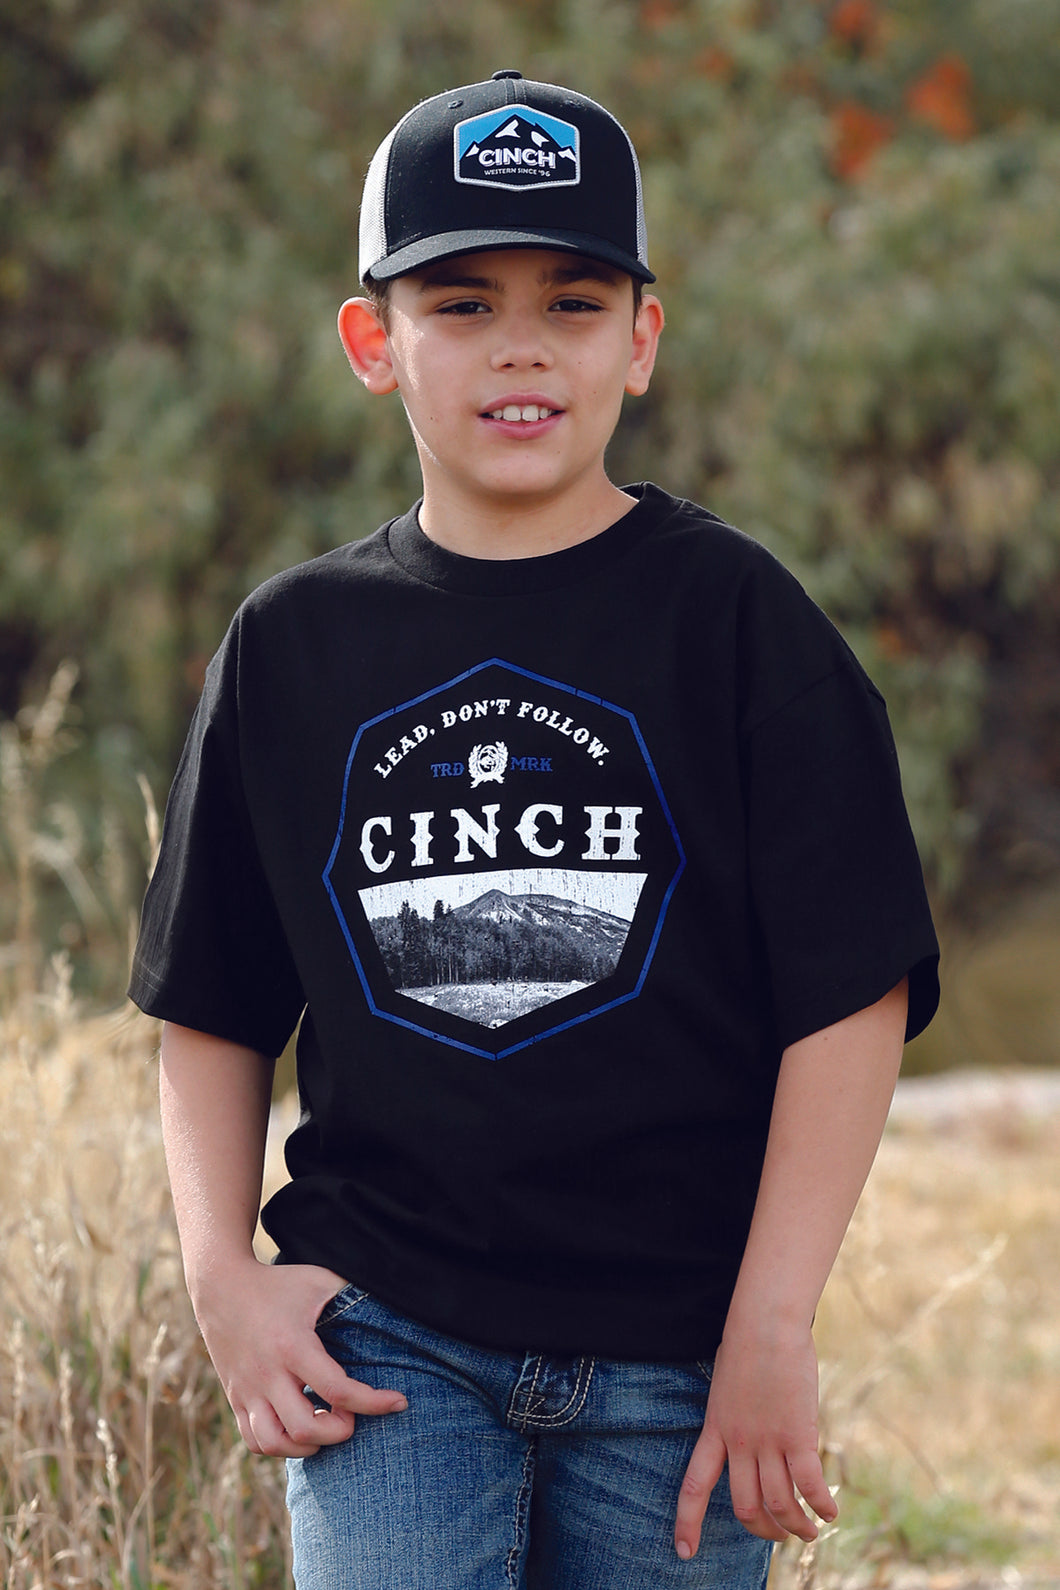 Cinch Boy's Lead Don't Follow Crew Neck T-shirt